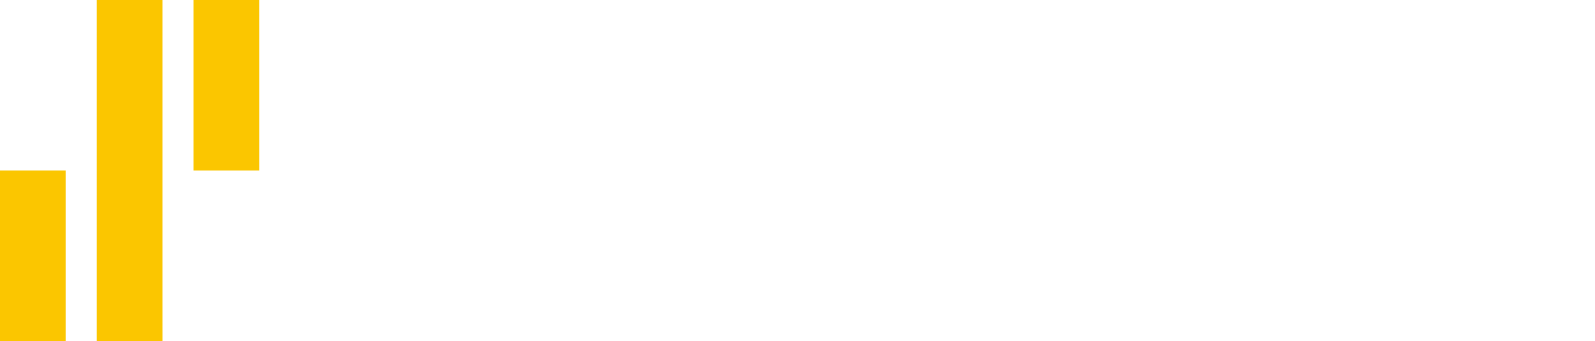 Synchrony logo large for dark backgrounds (transparent PNG)